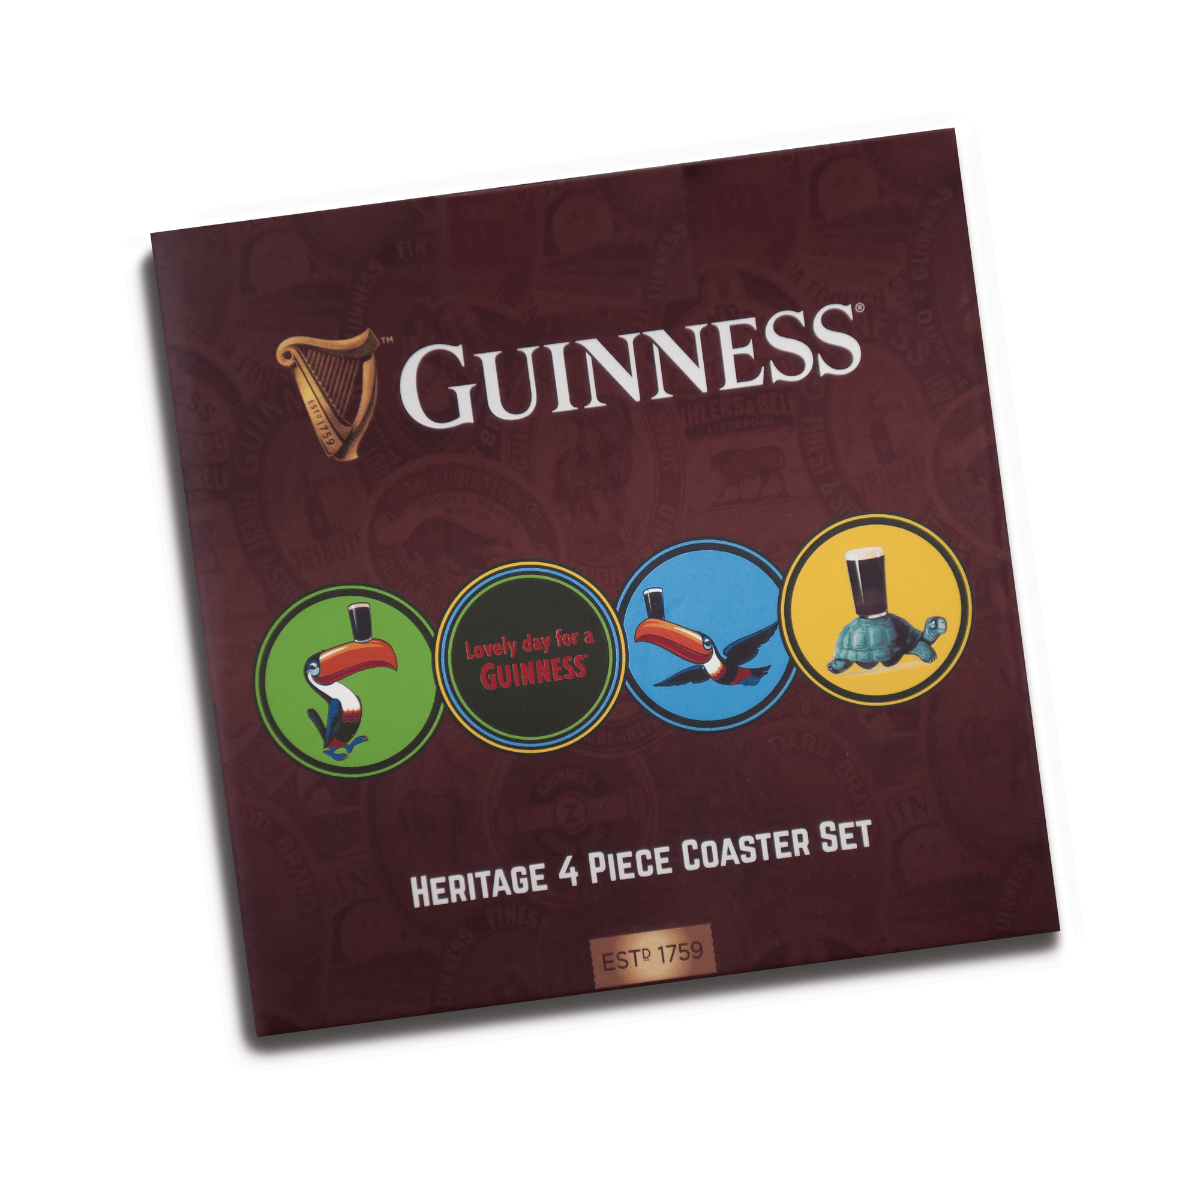 Guinness Ultimate Toucan Home Bar Pack